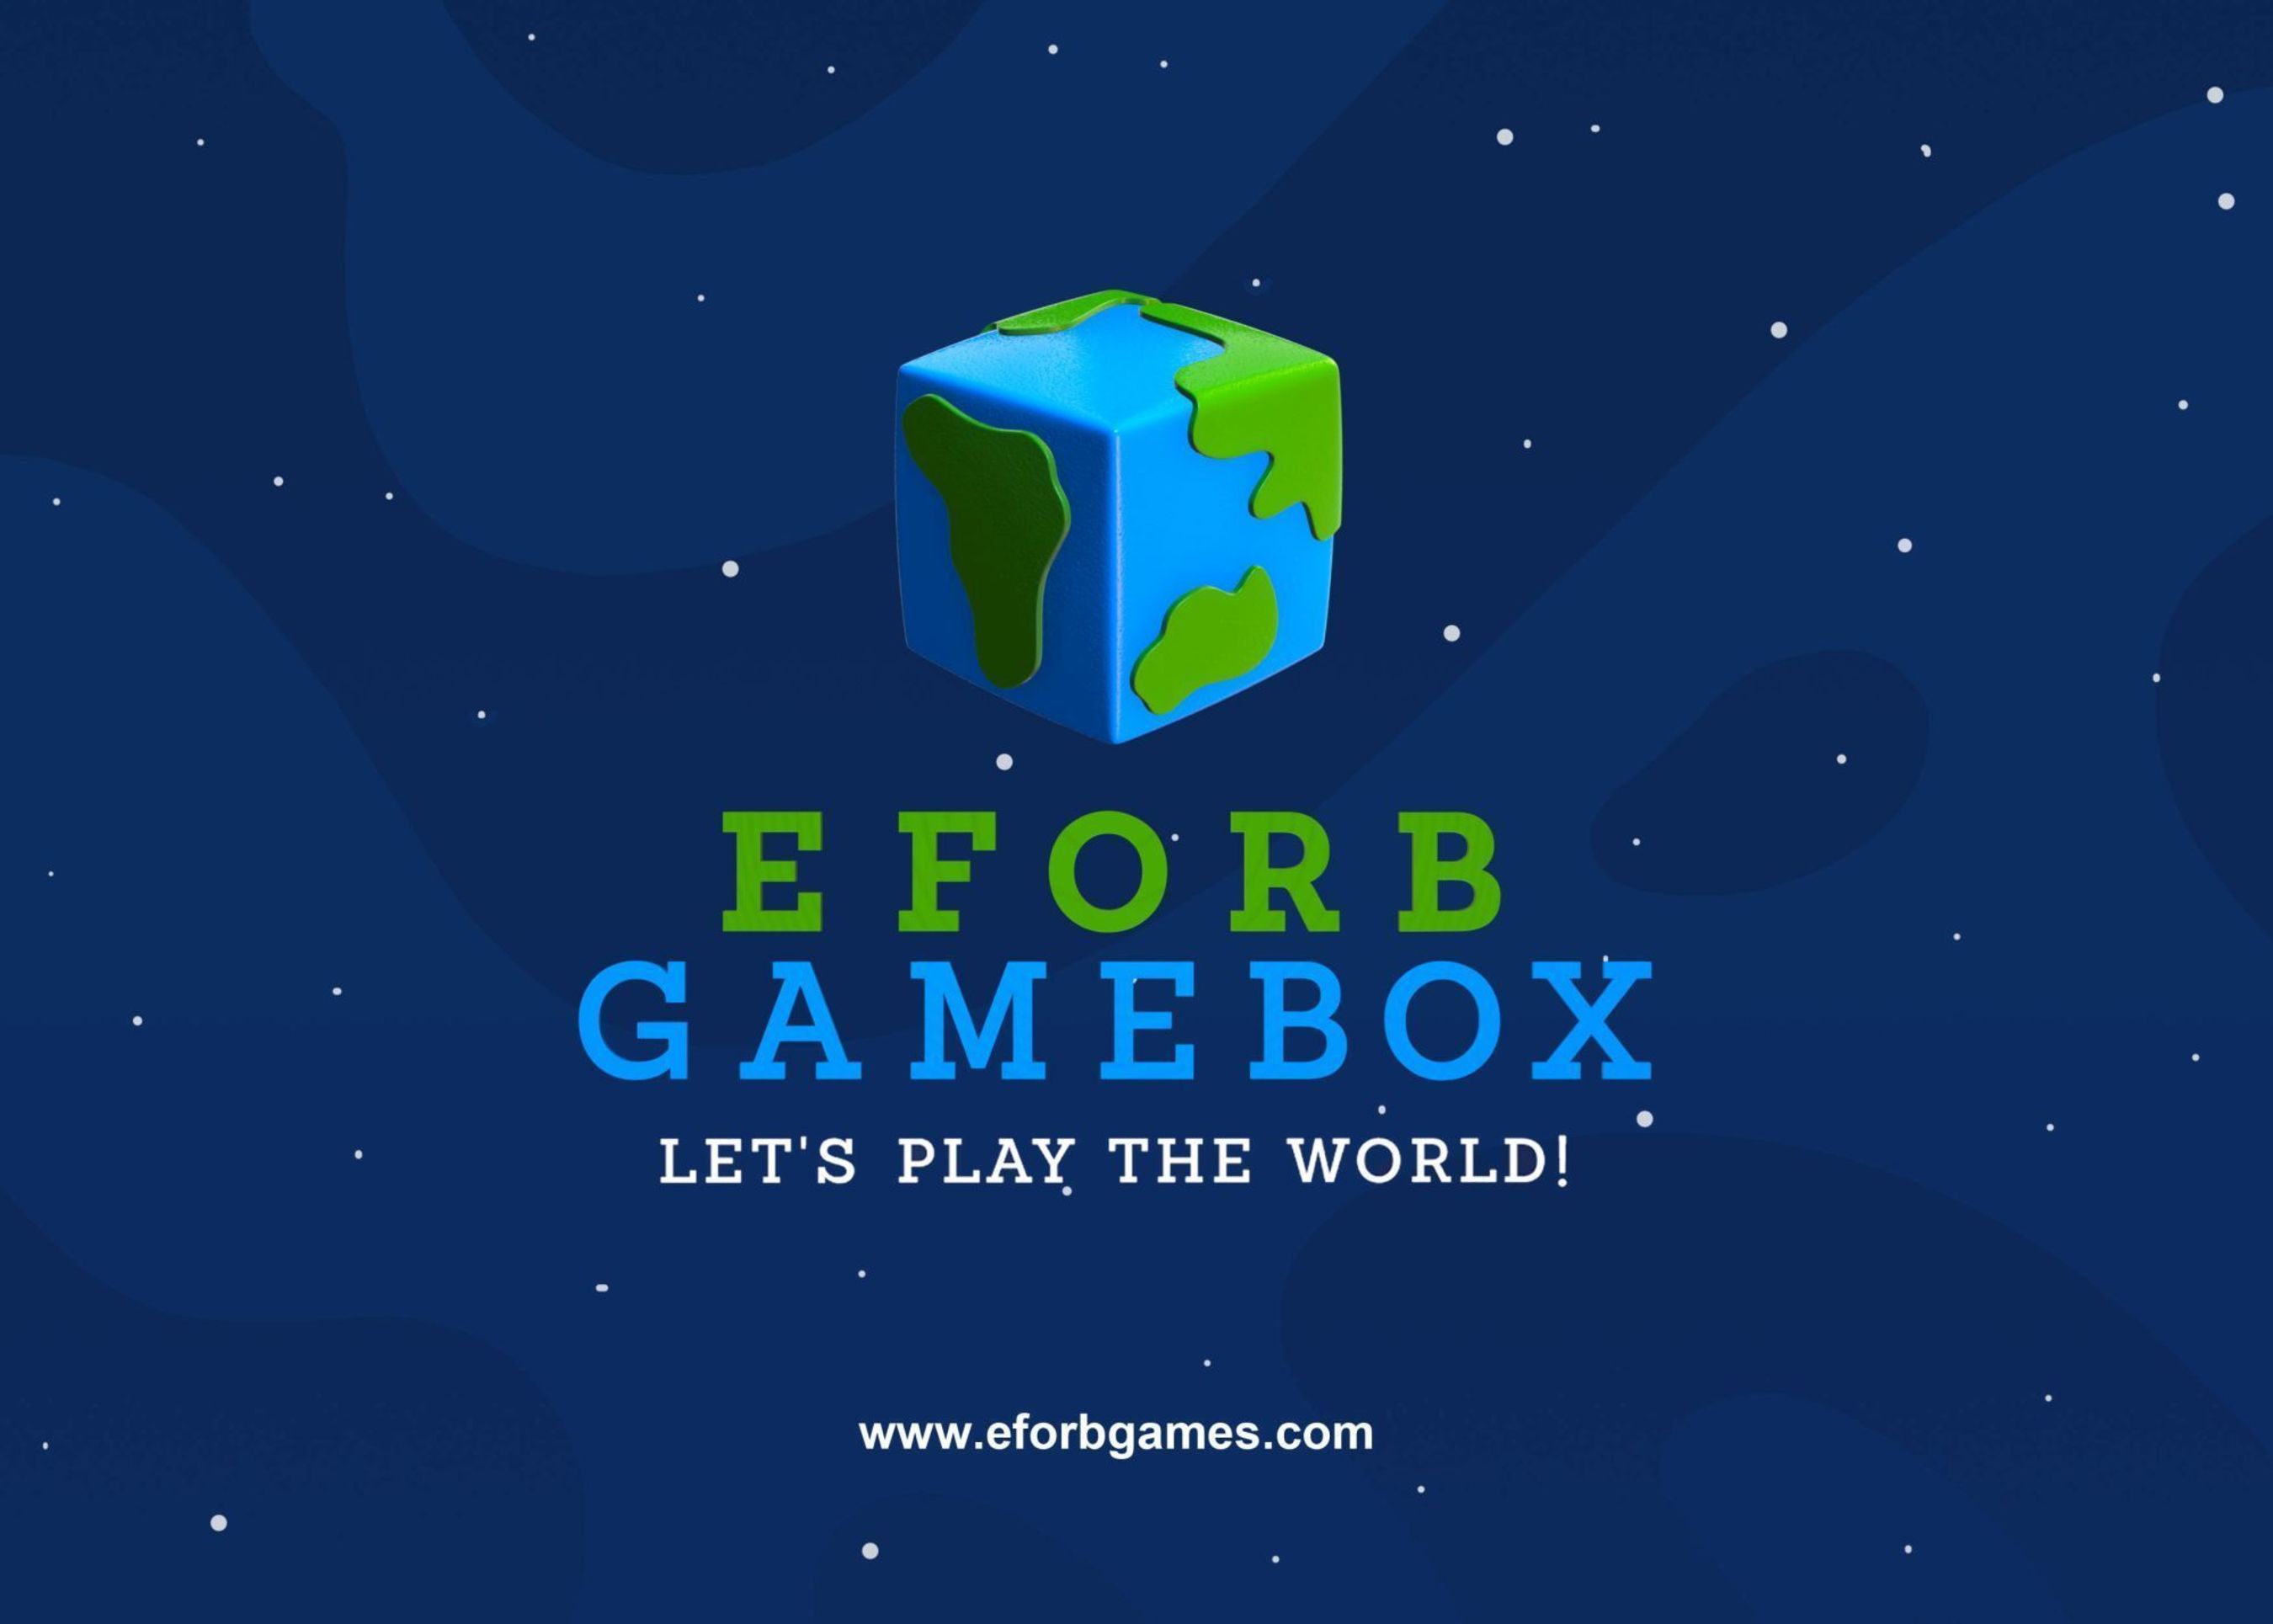 Eforb Gamebox - Let's Play the World (PRNewsFoto/Eforb)